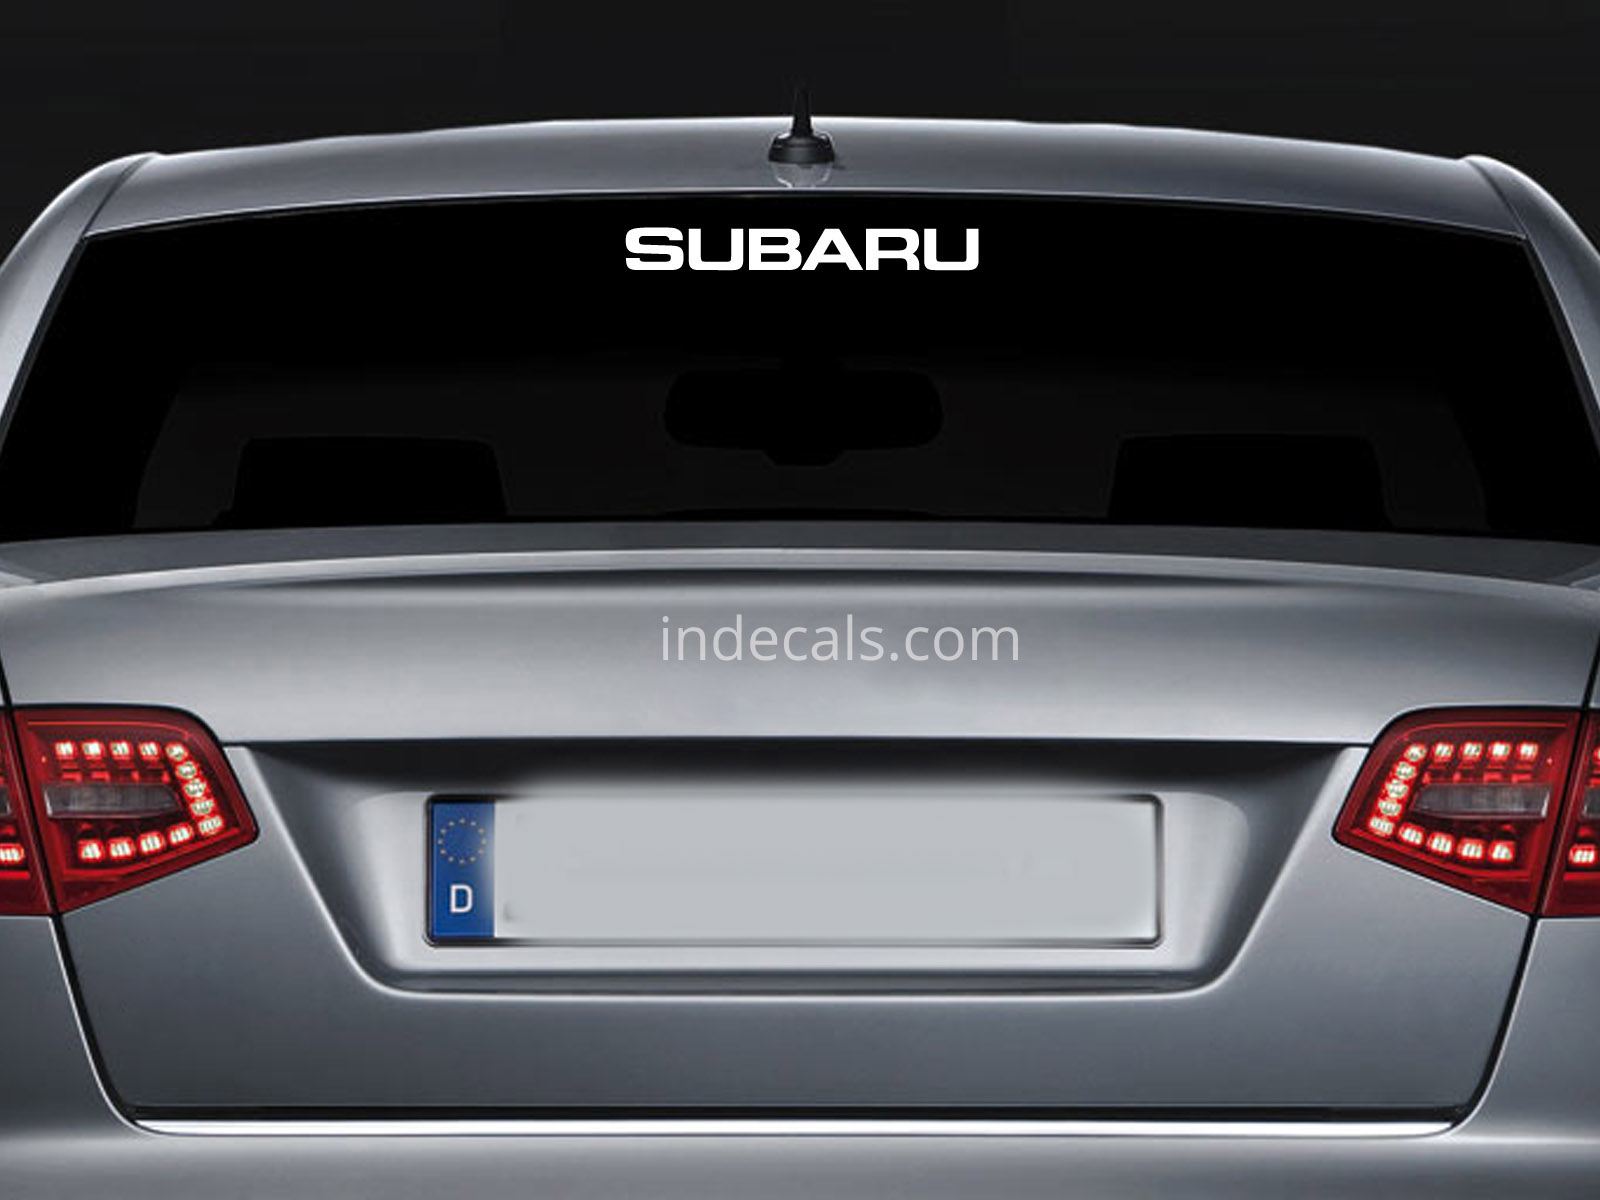 1 x Subaru Sticker for Windshield or Back Window - White